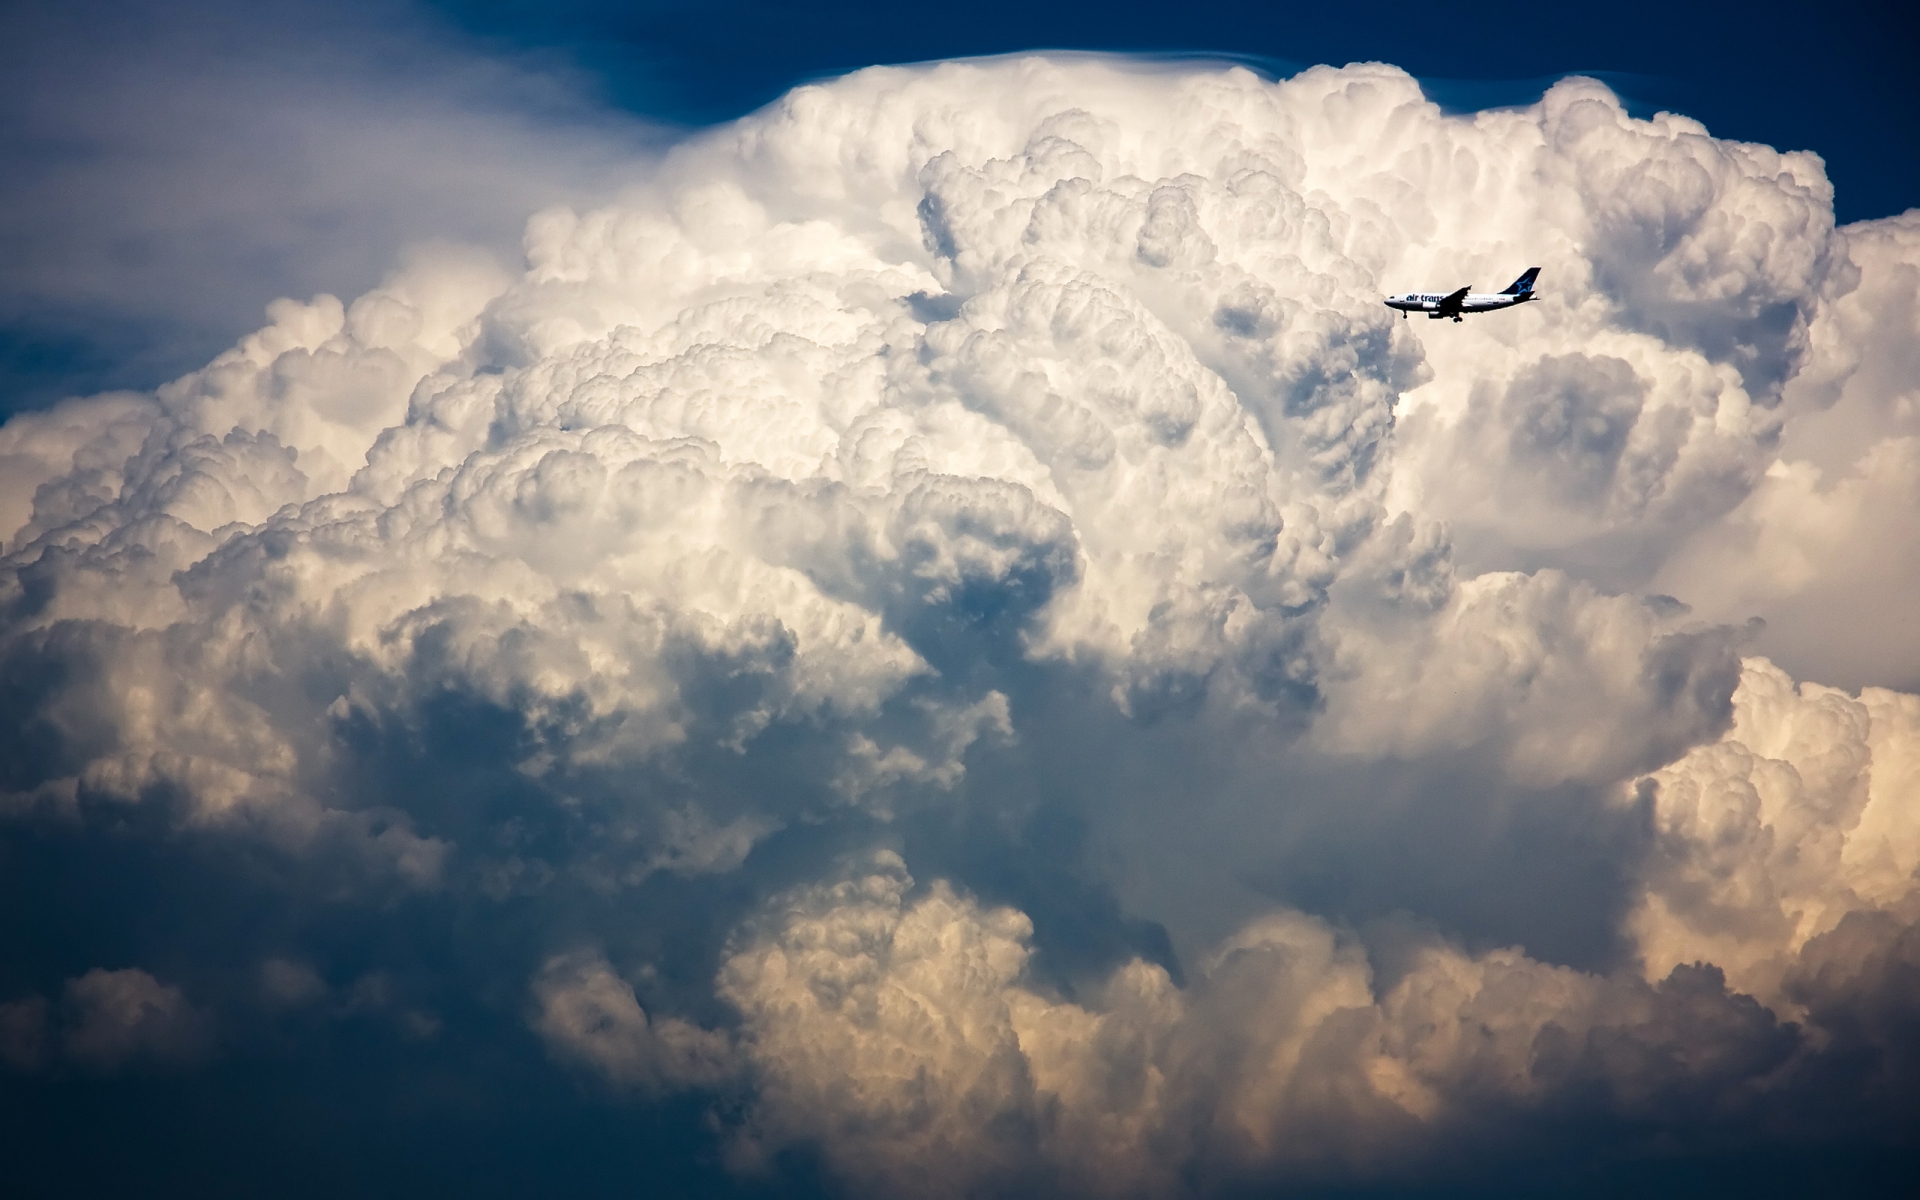 Air Transat vs Storm Cloud for 1920 x 1200 widescreen resolution